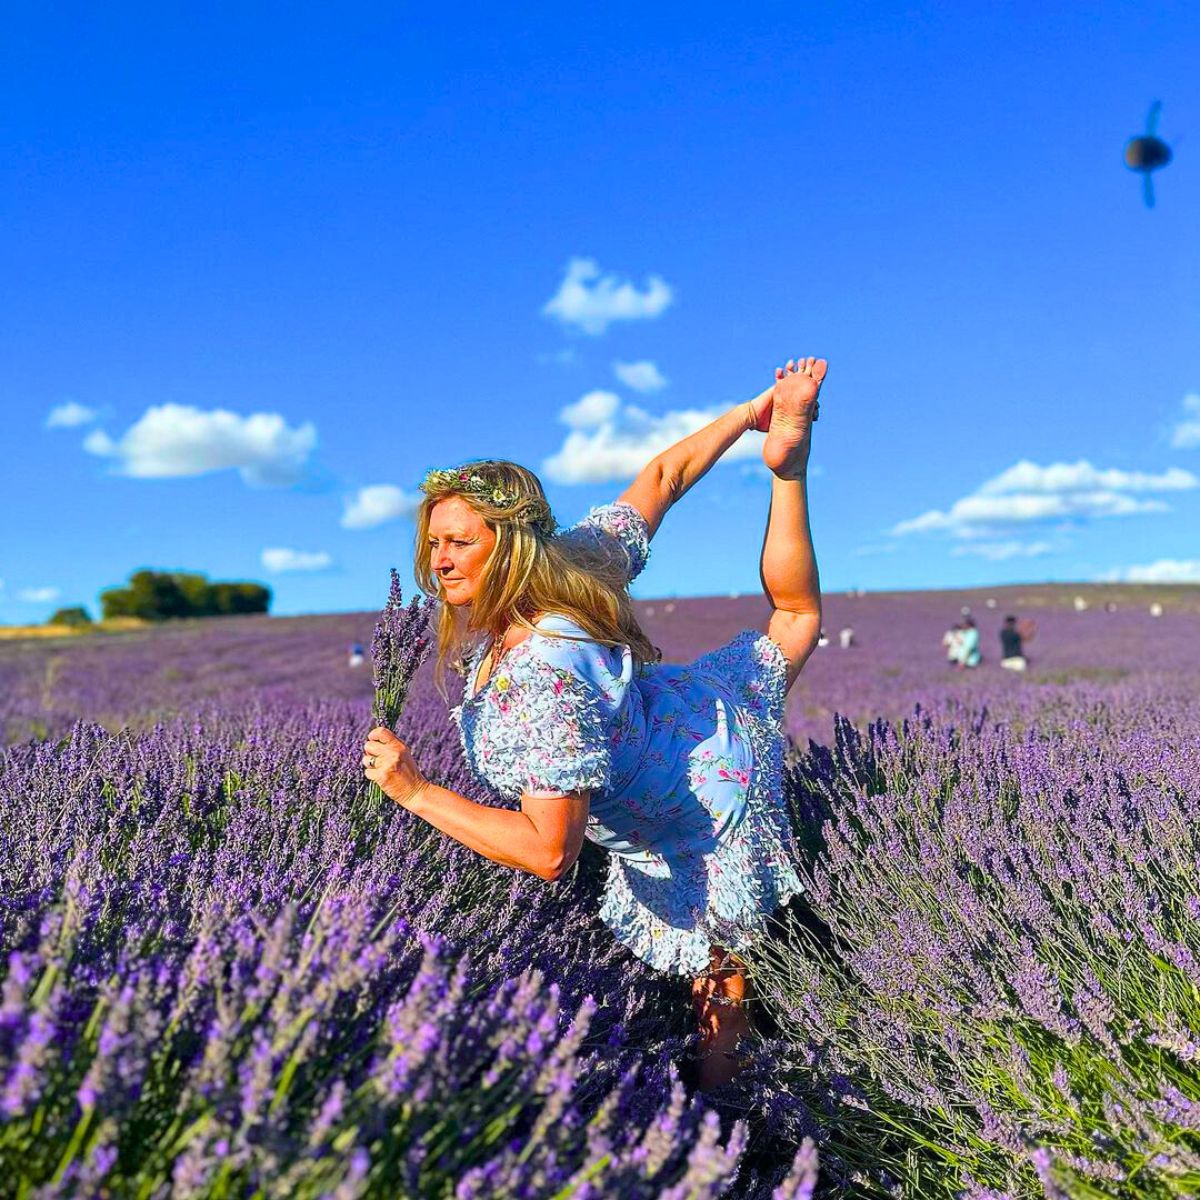 Lavender healing benefits